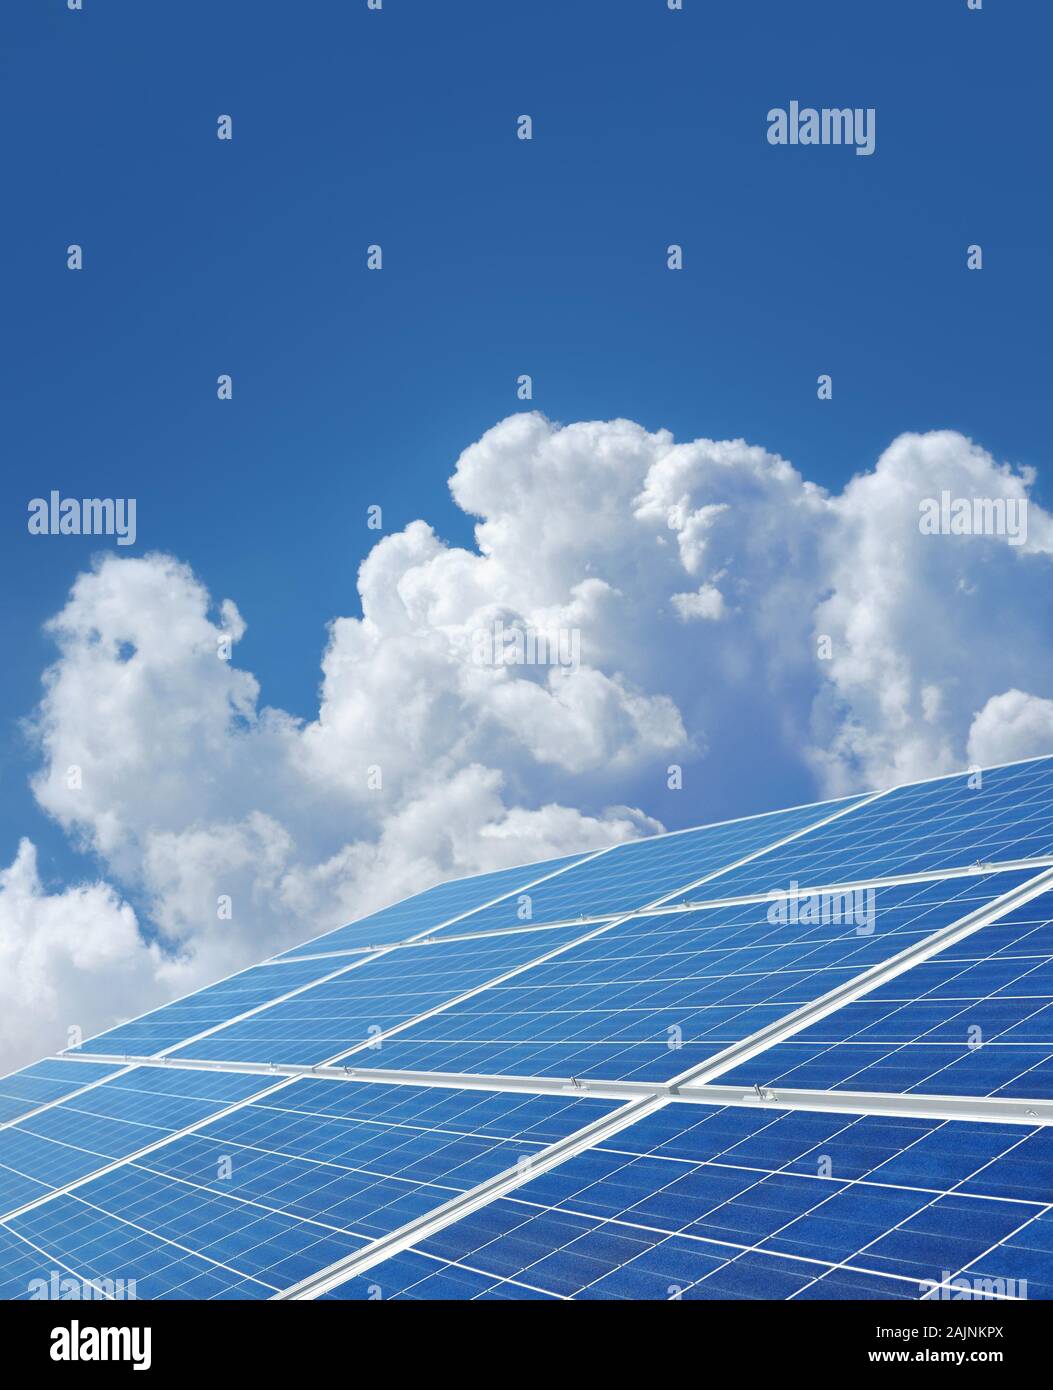 Solar power panels generating renewable energy Stock Photo